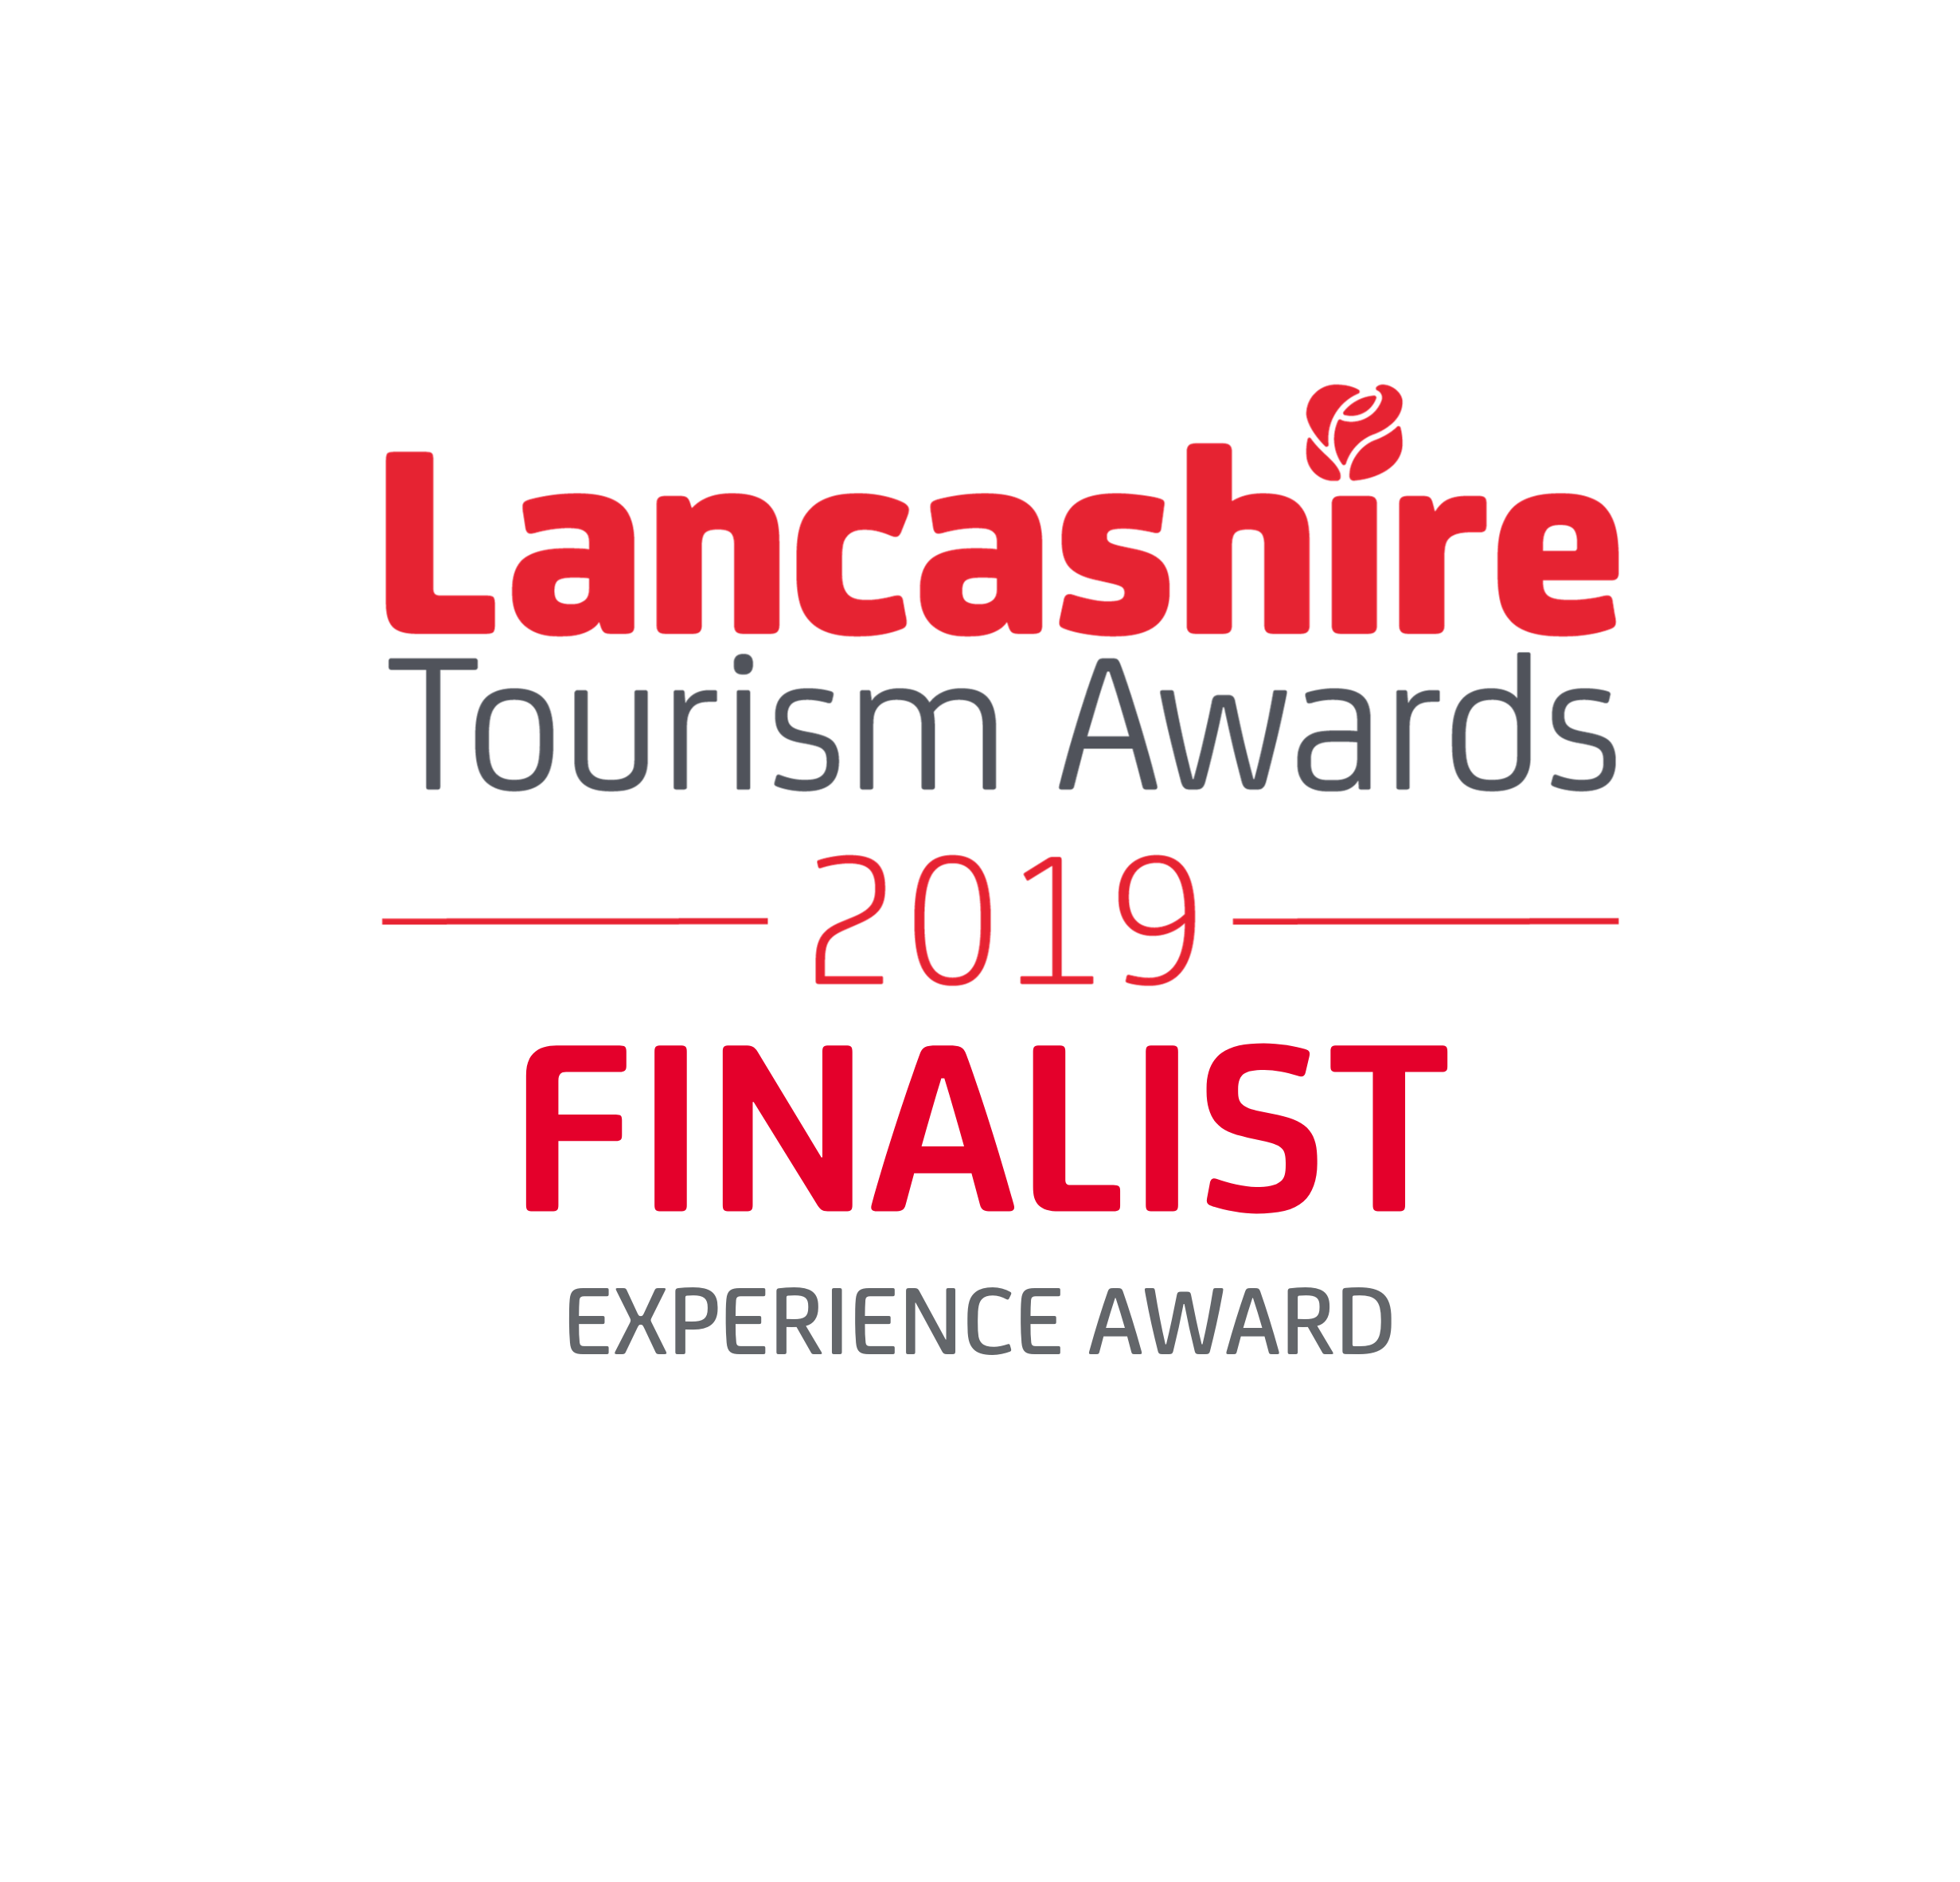 Lancashire Tourism Awards Finalist 2019 EXPERIENCE